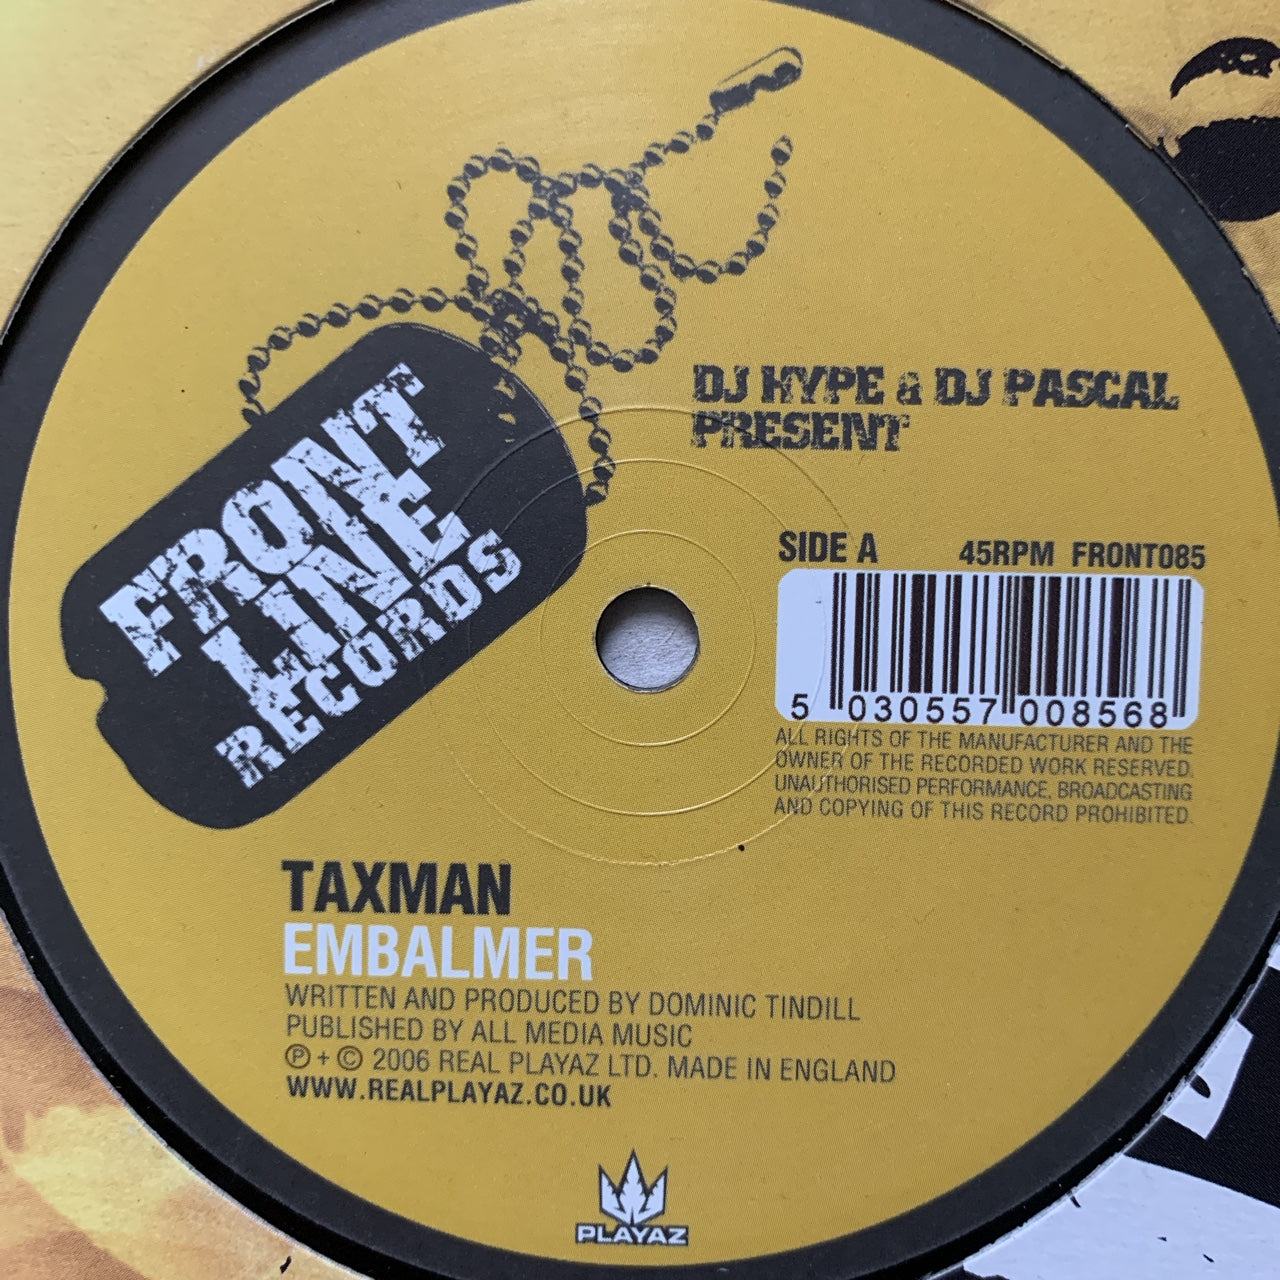 Dj Hype & Pascal presents Taxman “Embalmer” / “Spaceman”